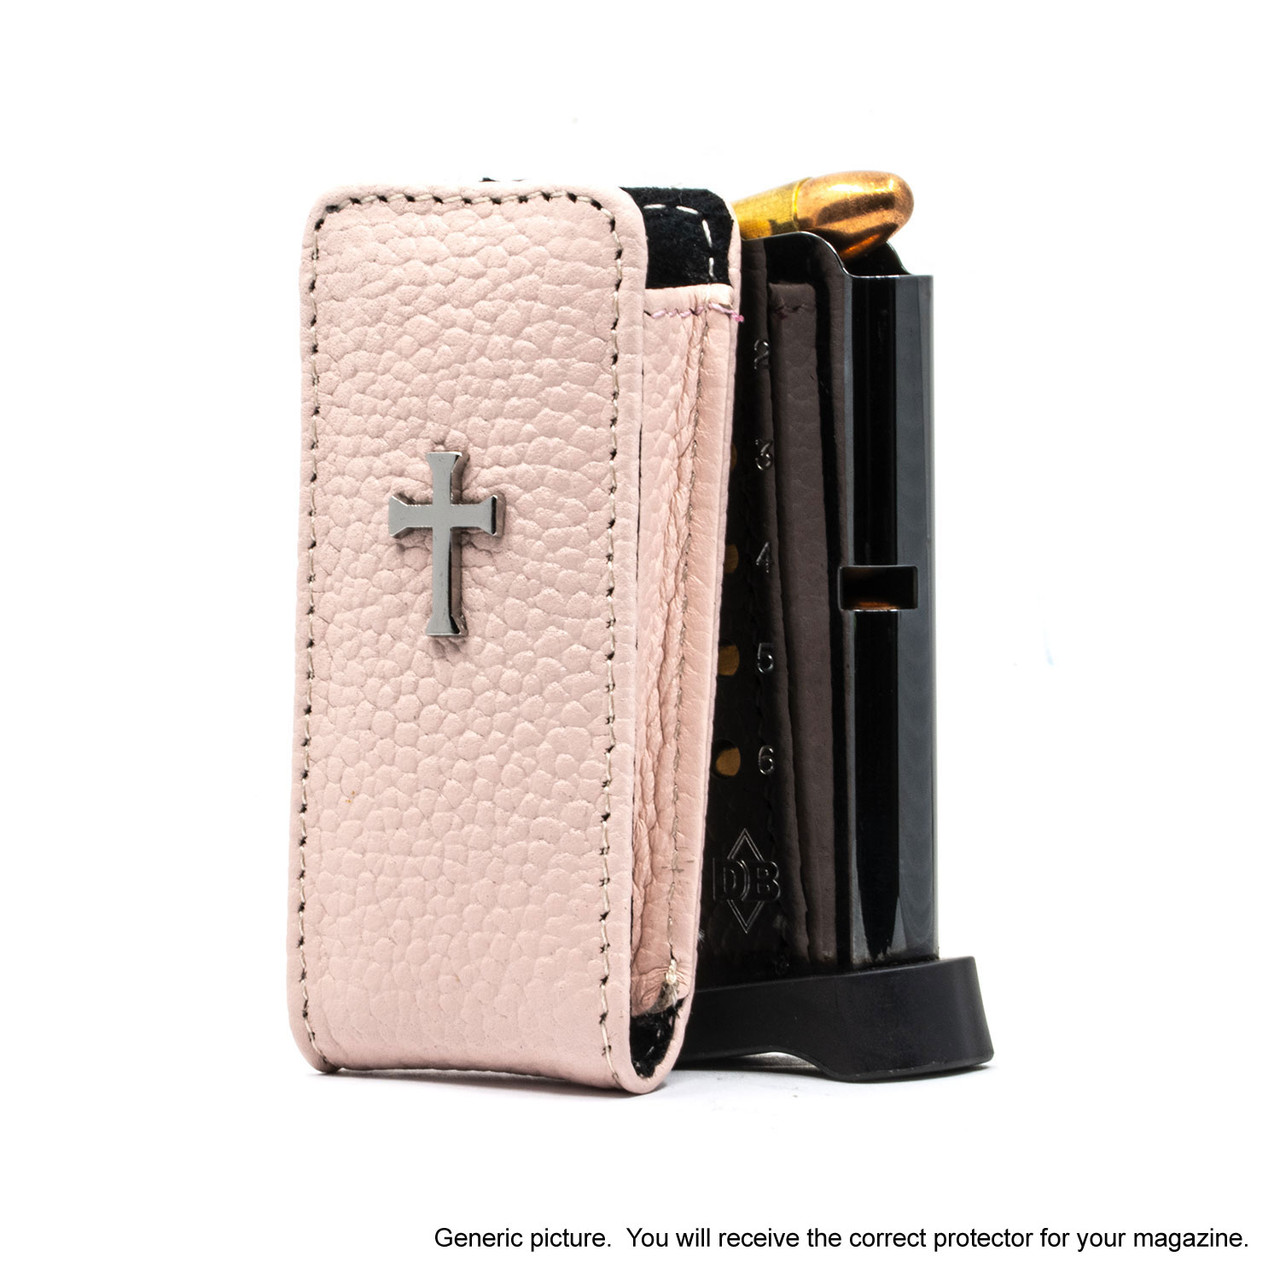 HK VP9 Pink Carry Faithfully Cross Magazine Pocket Protector